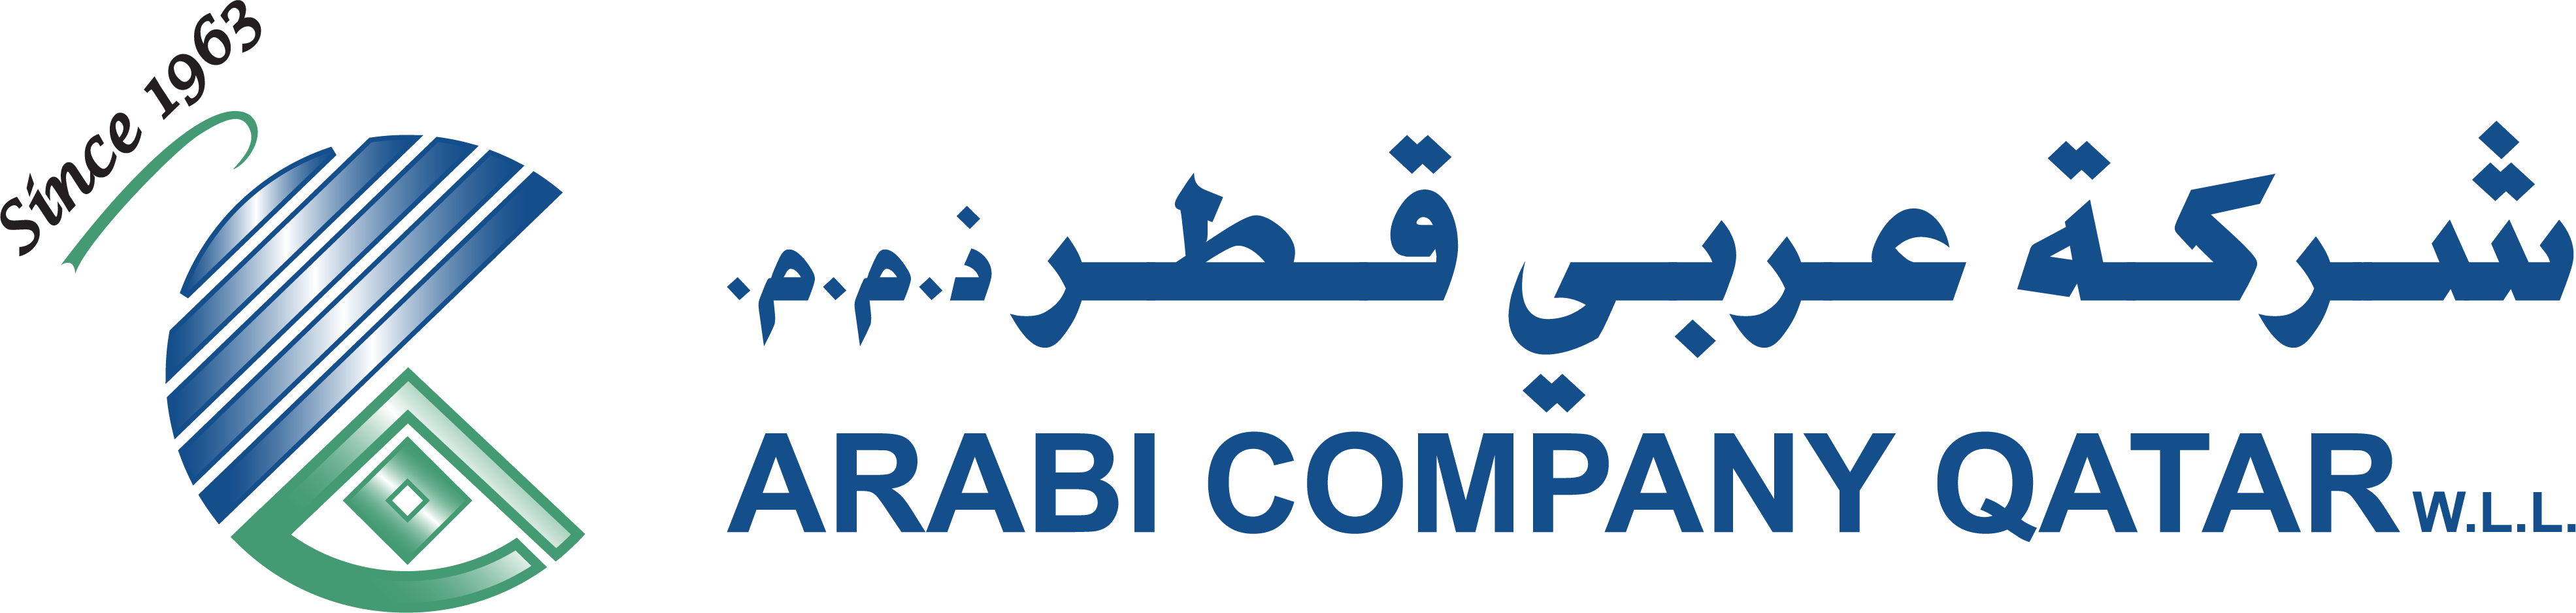 Arabi Company Qatar